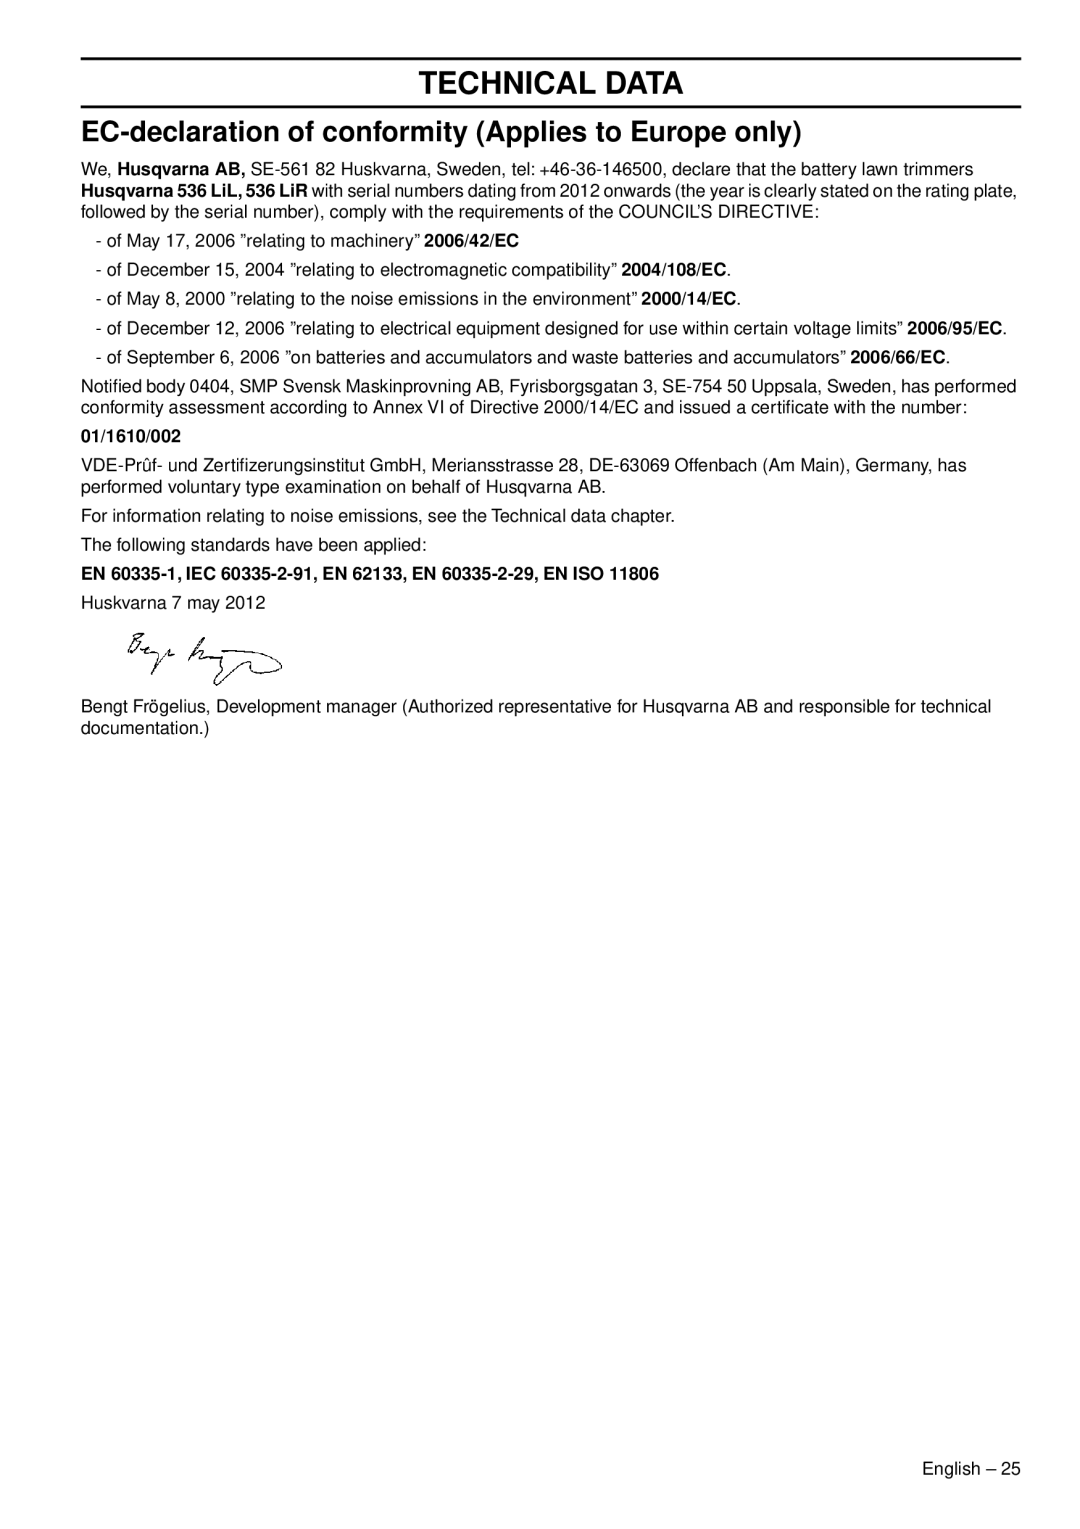 Husqvarna 536 LIL, 536 LIR manual EC-declaration of conformity Applies to Europe only, 01/1610/002, Technical Data 